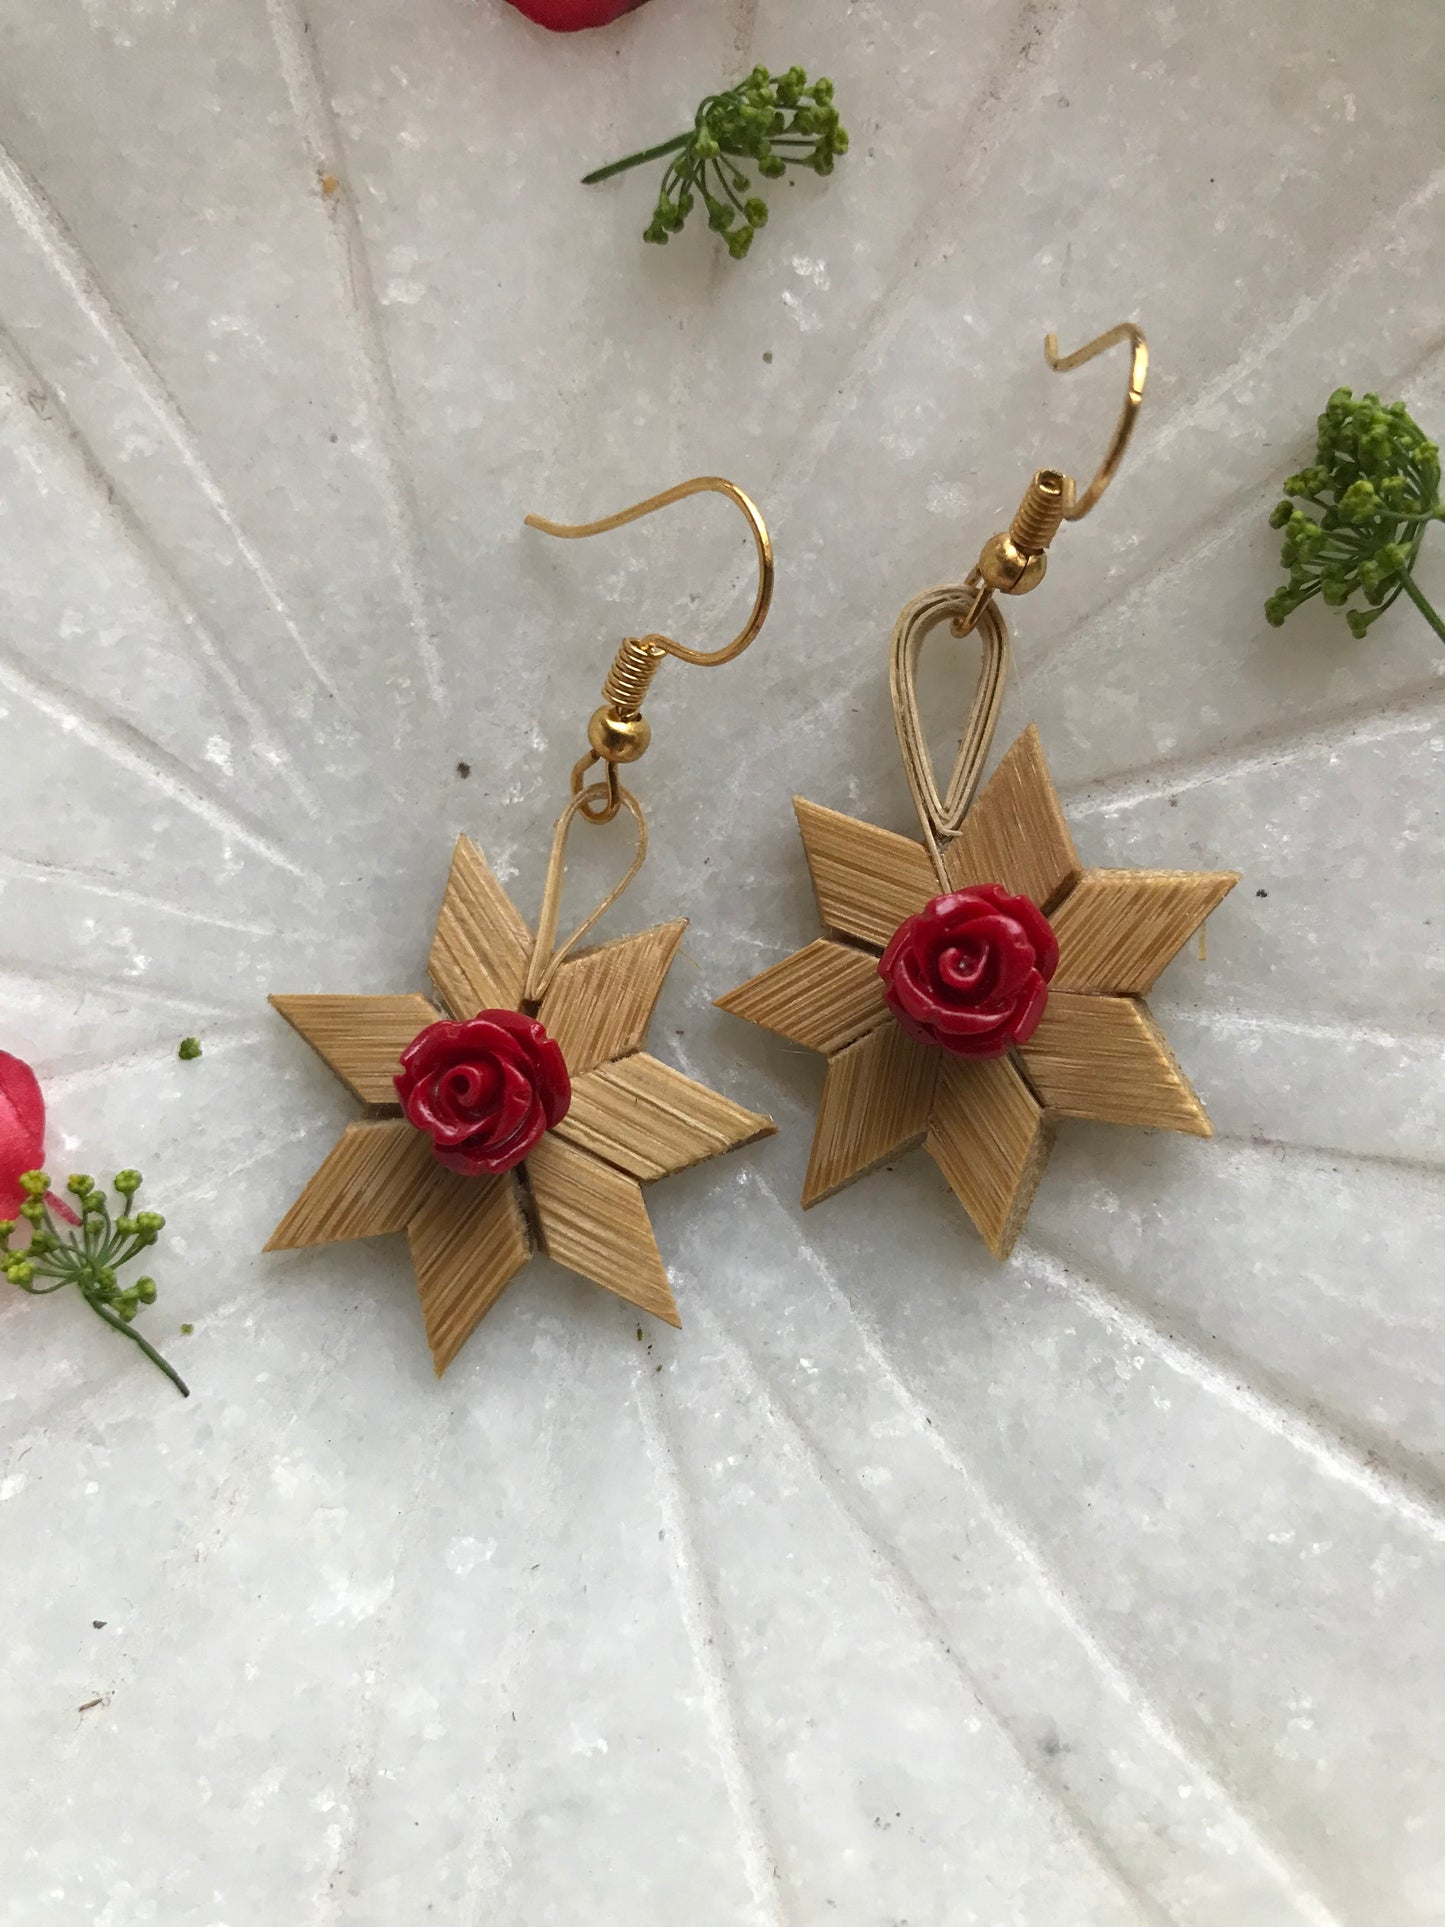 Handcrafted Bamboo Star Flower Earrings